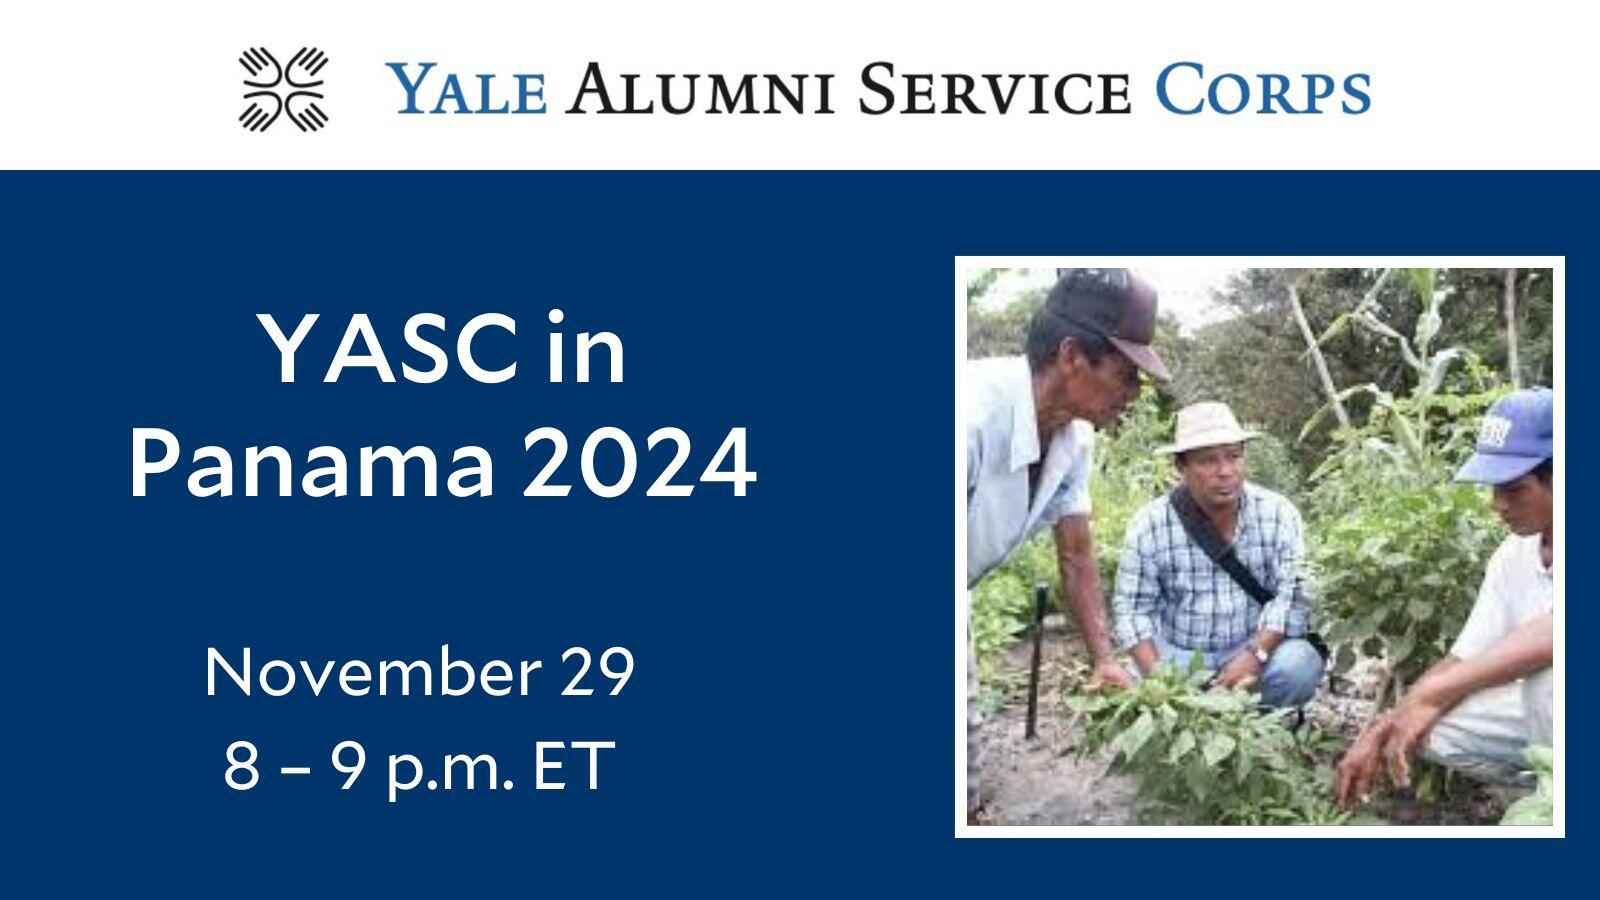 Yale Alumni Service Corps (YASC) in Panama 2024